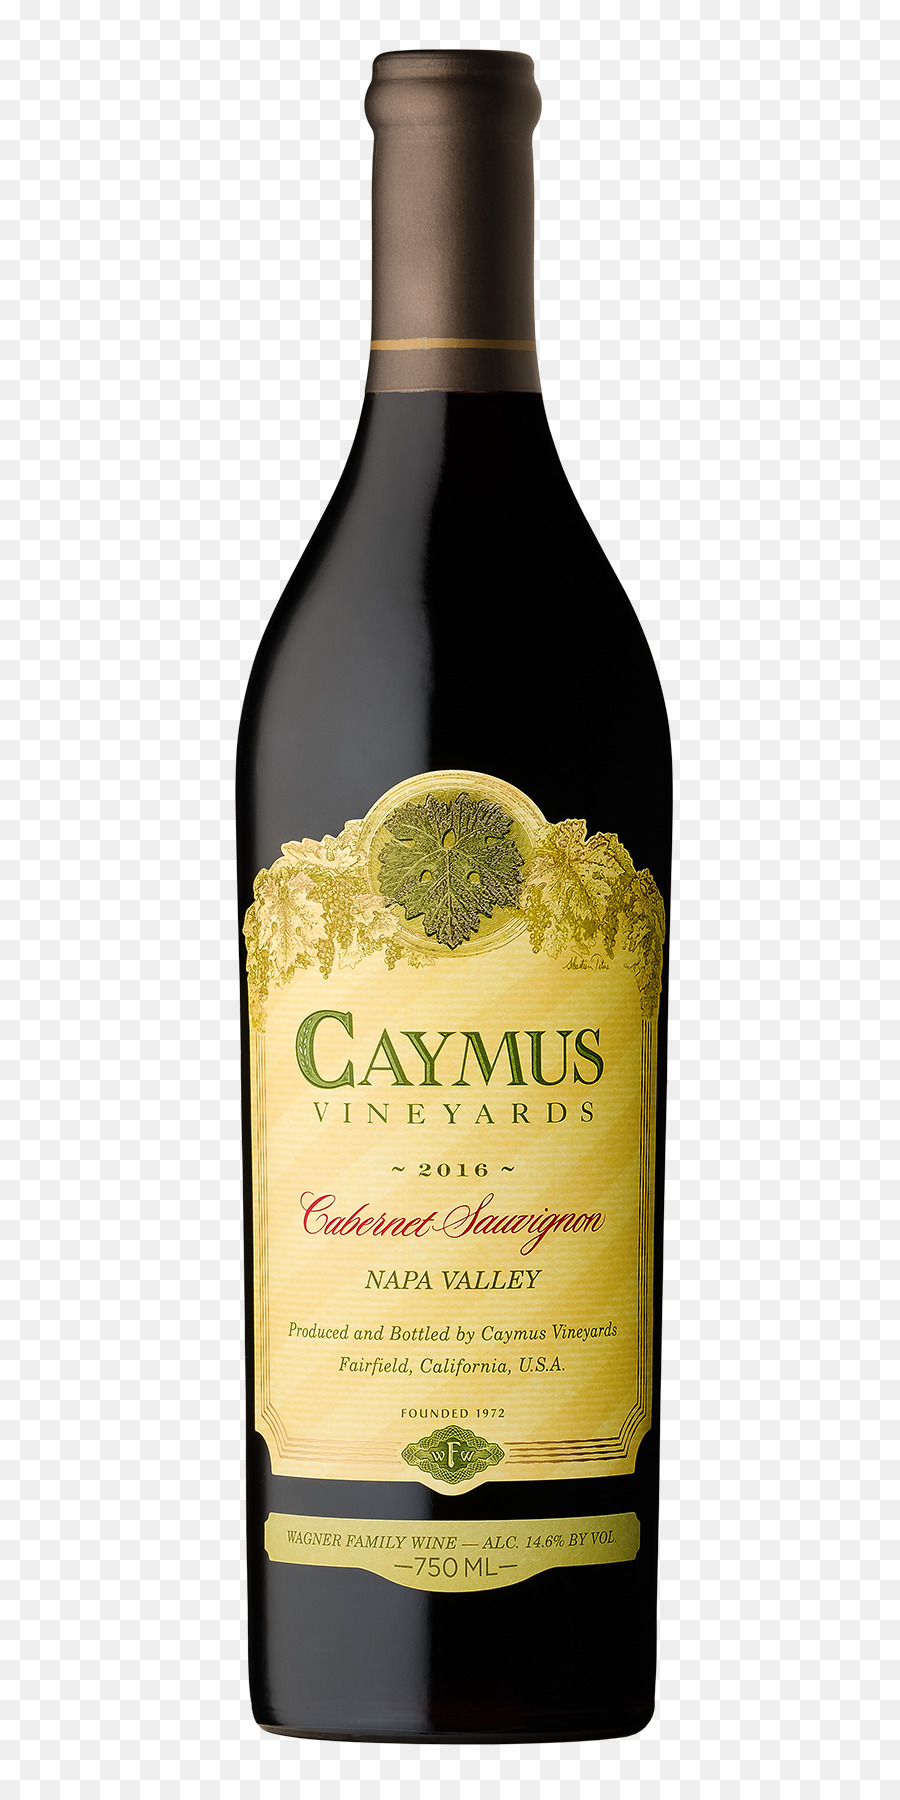 Caymus Vineyards Cabernet Sauvignon Rotwein, Sauvignon blanc - Napa Valley